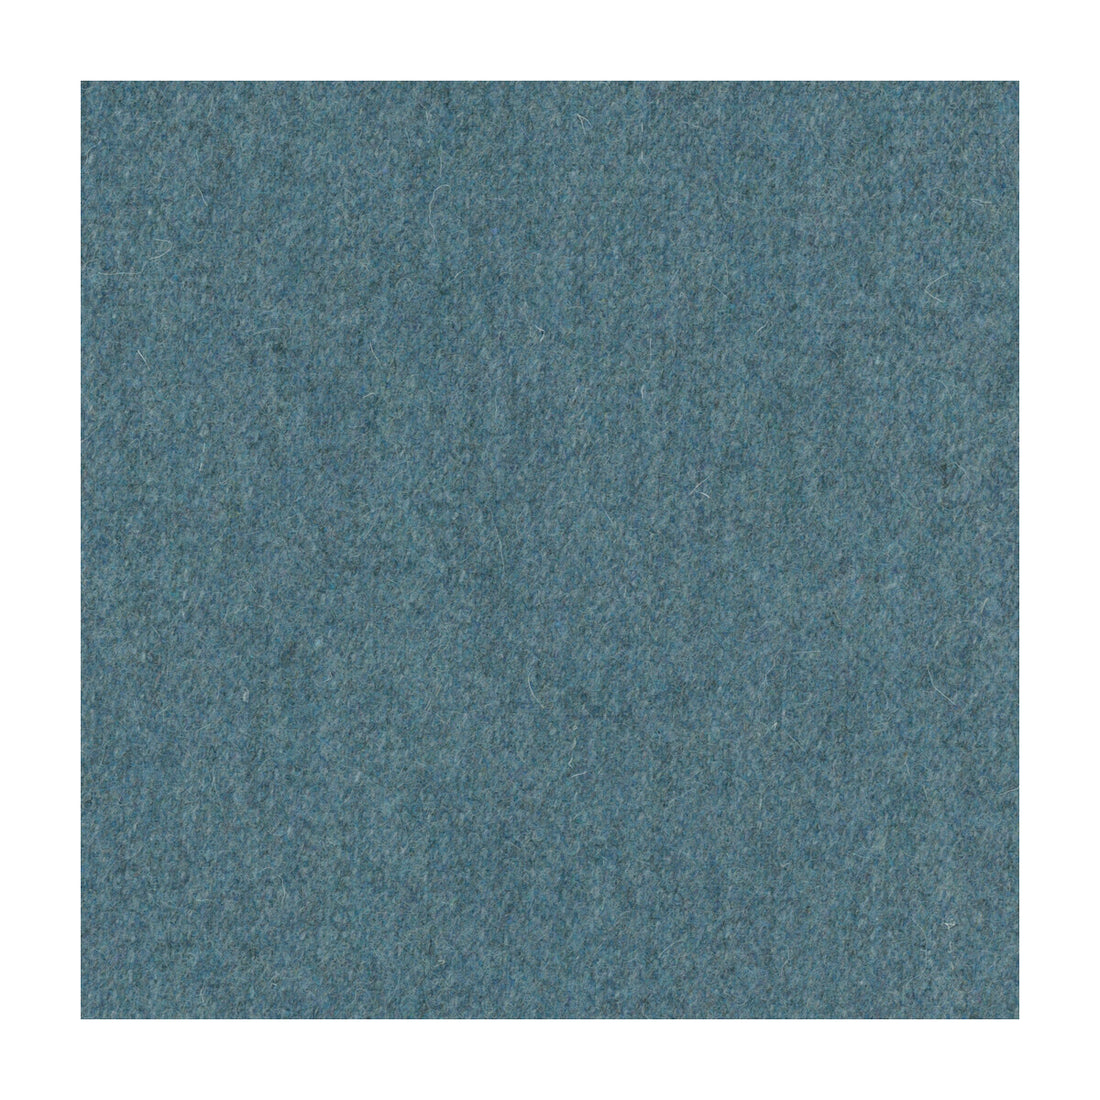 Skye Wool fabric in calypso color - pattern 2017118.313.0 - by Lee Jofa